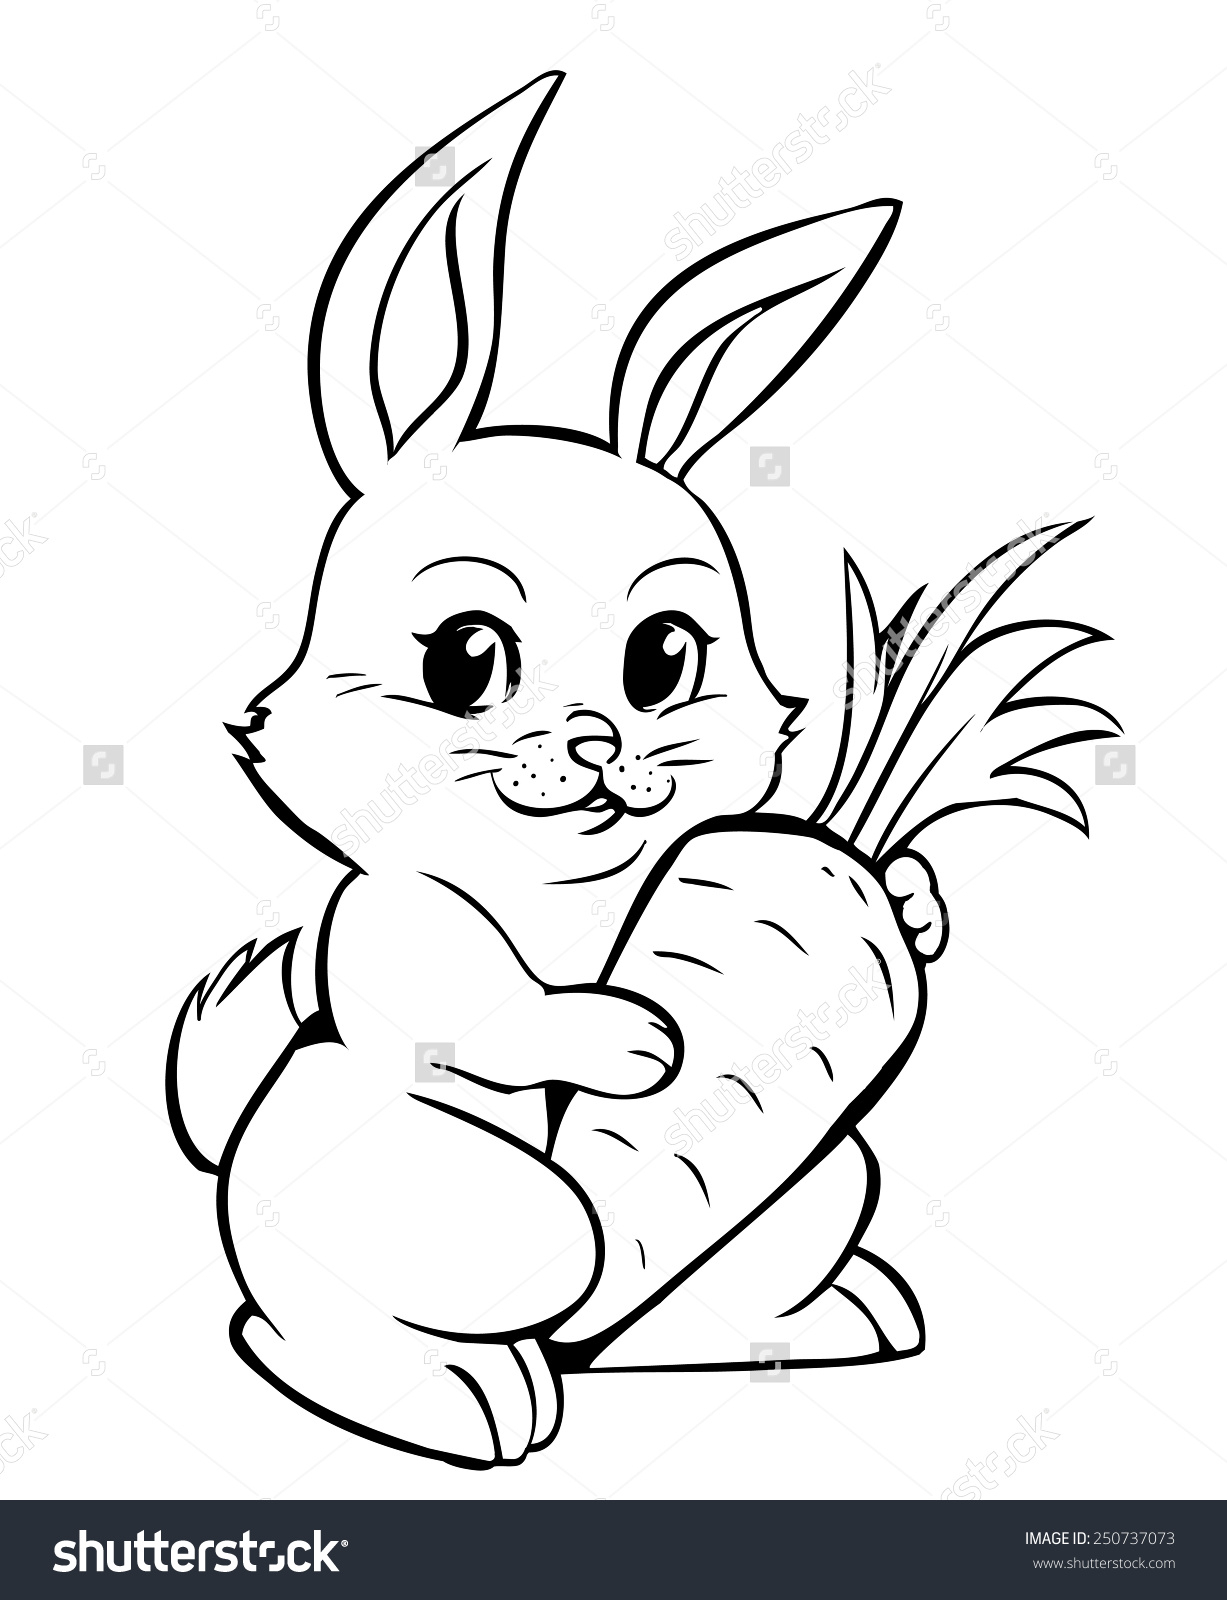 Cartoon Bunny Drawing - Cartoon Rabbits To Draw | Bodewasude